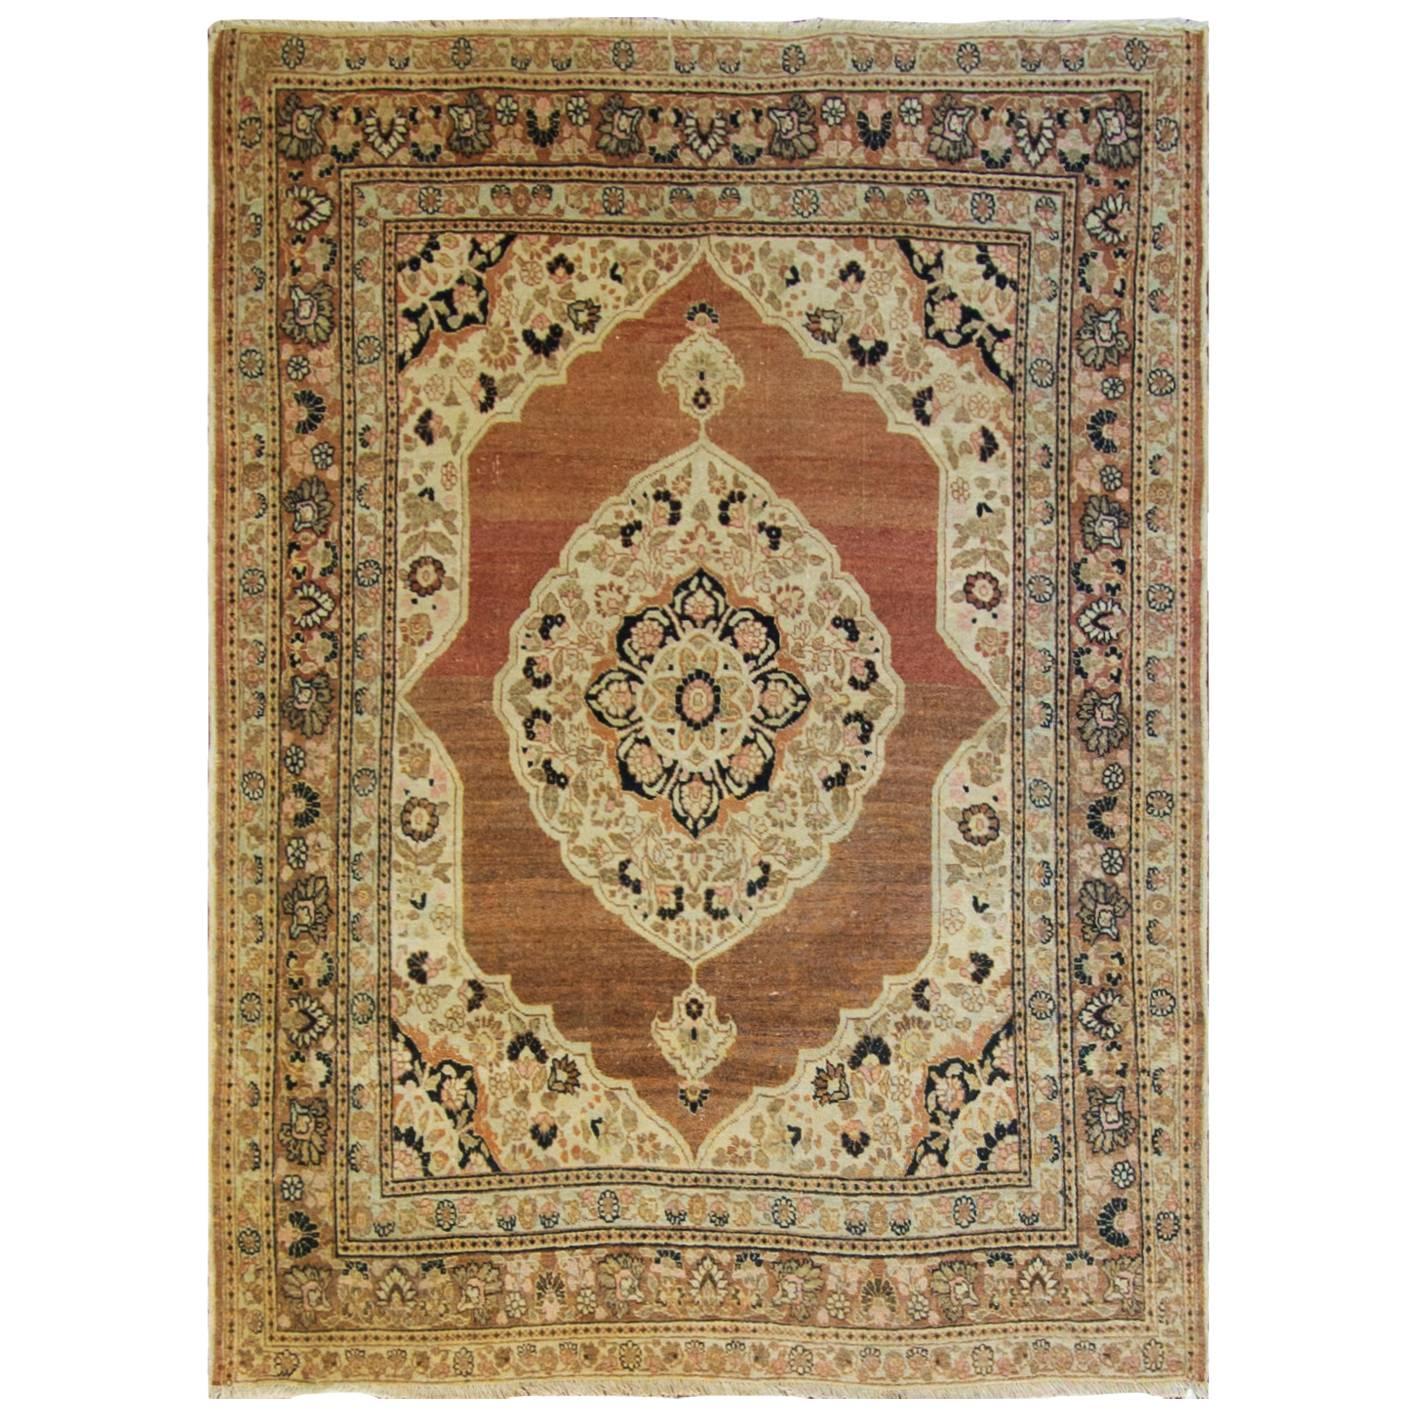 Antique Persian Tabriz Hajji Rug, 4'1" x 5'4" c-1900 For Sale